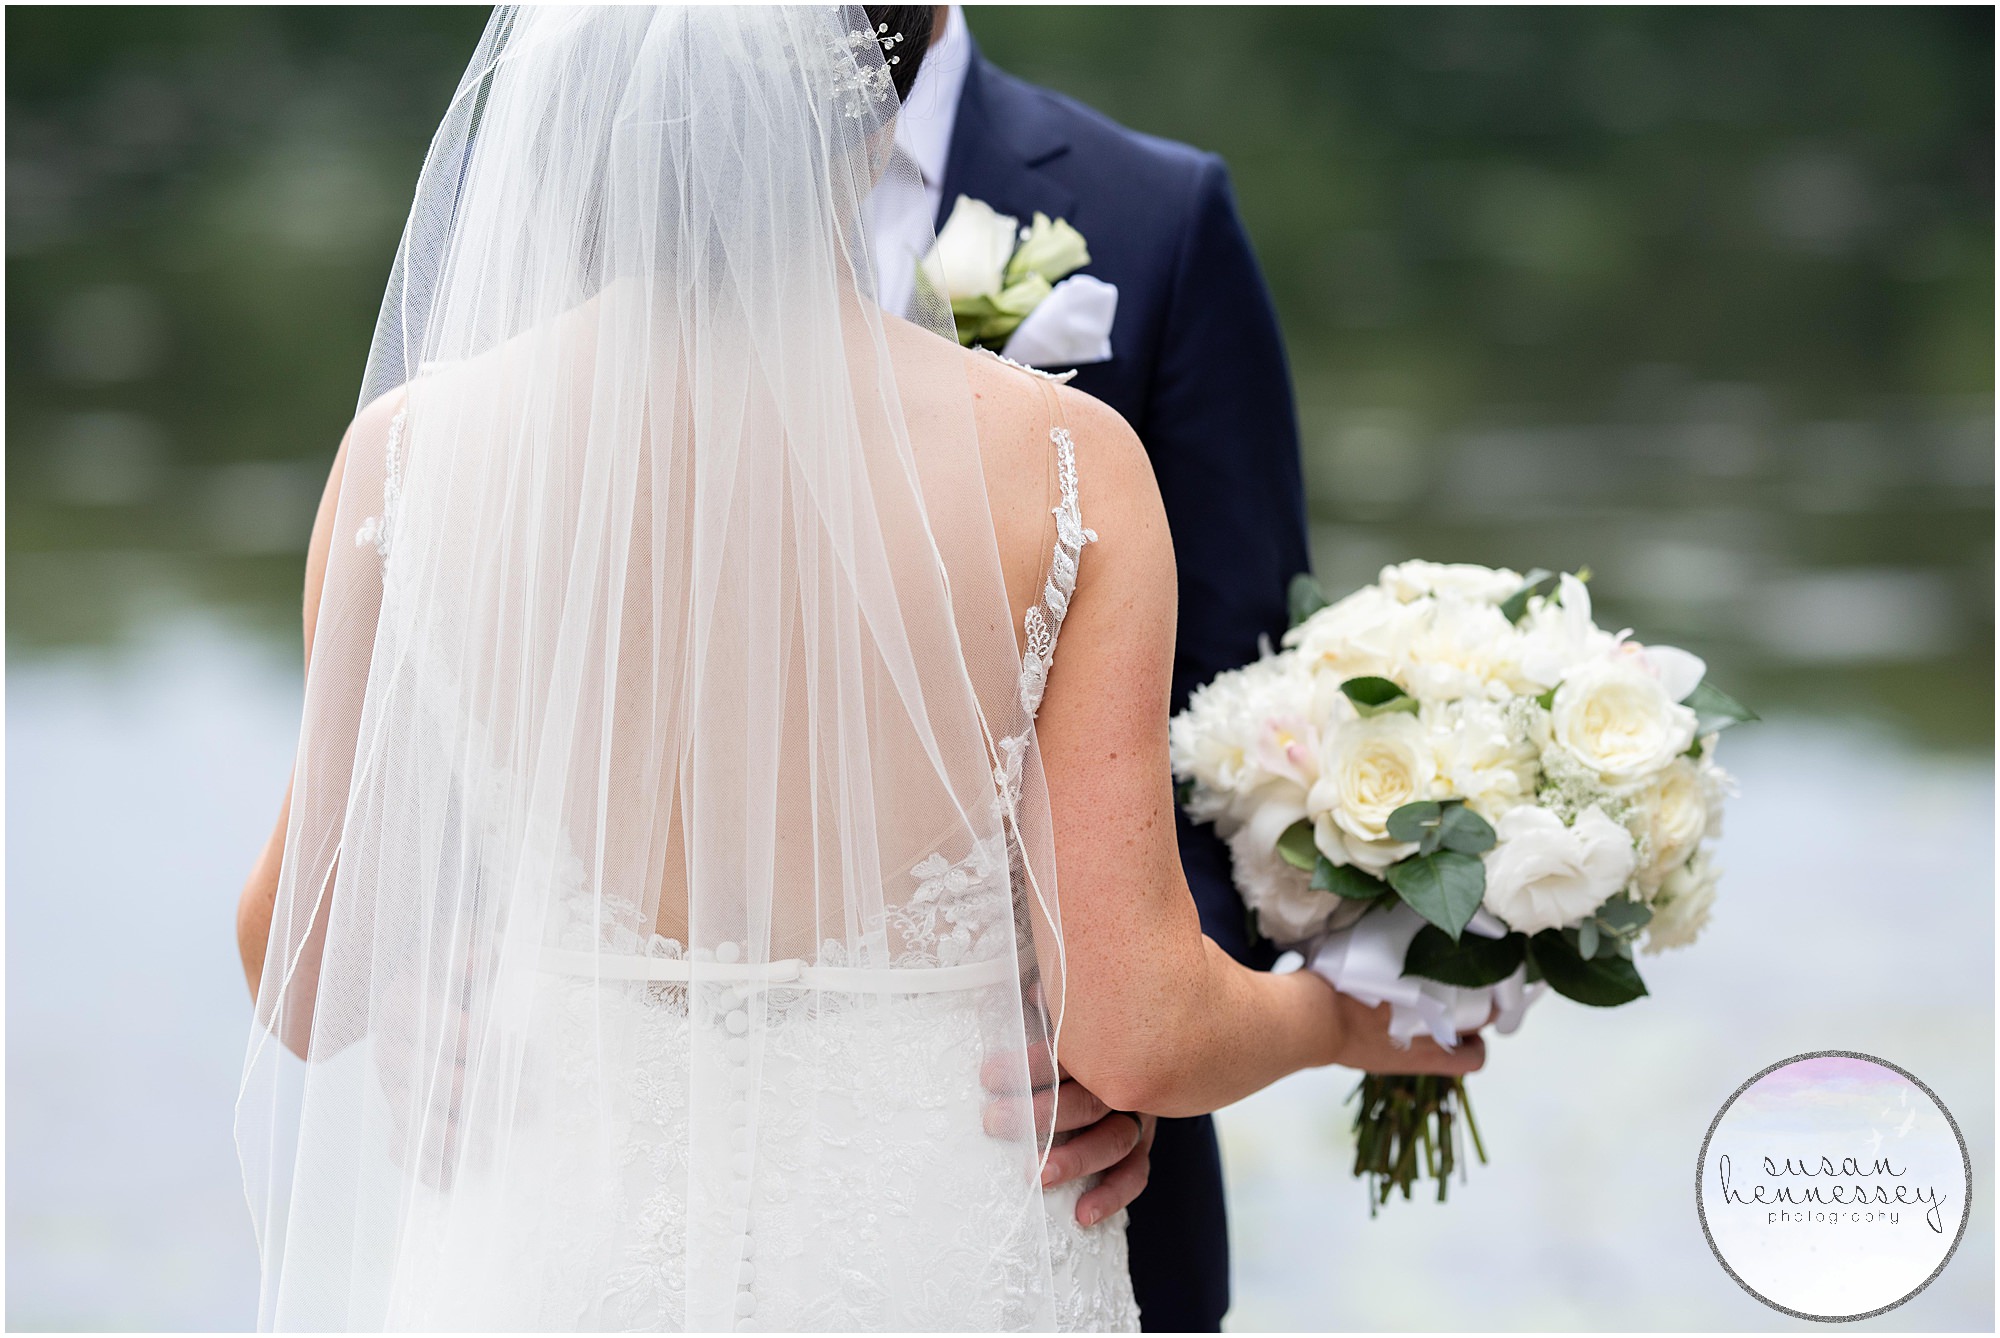 Details of bride's dress and bouquet